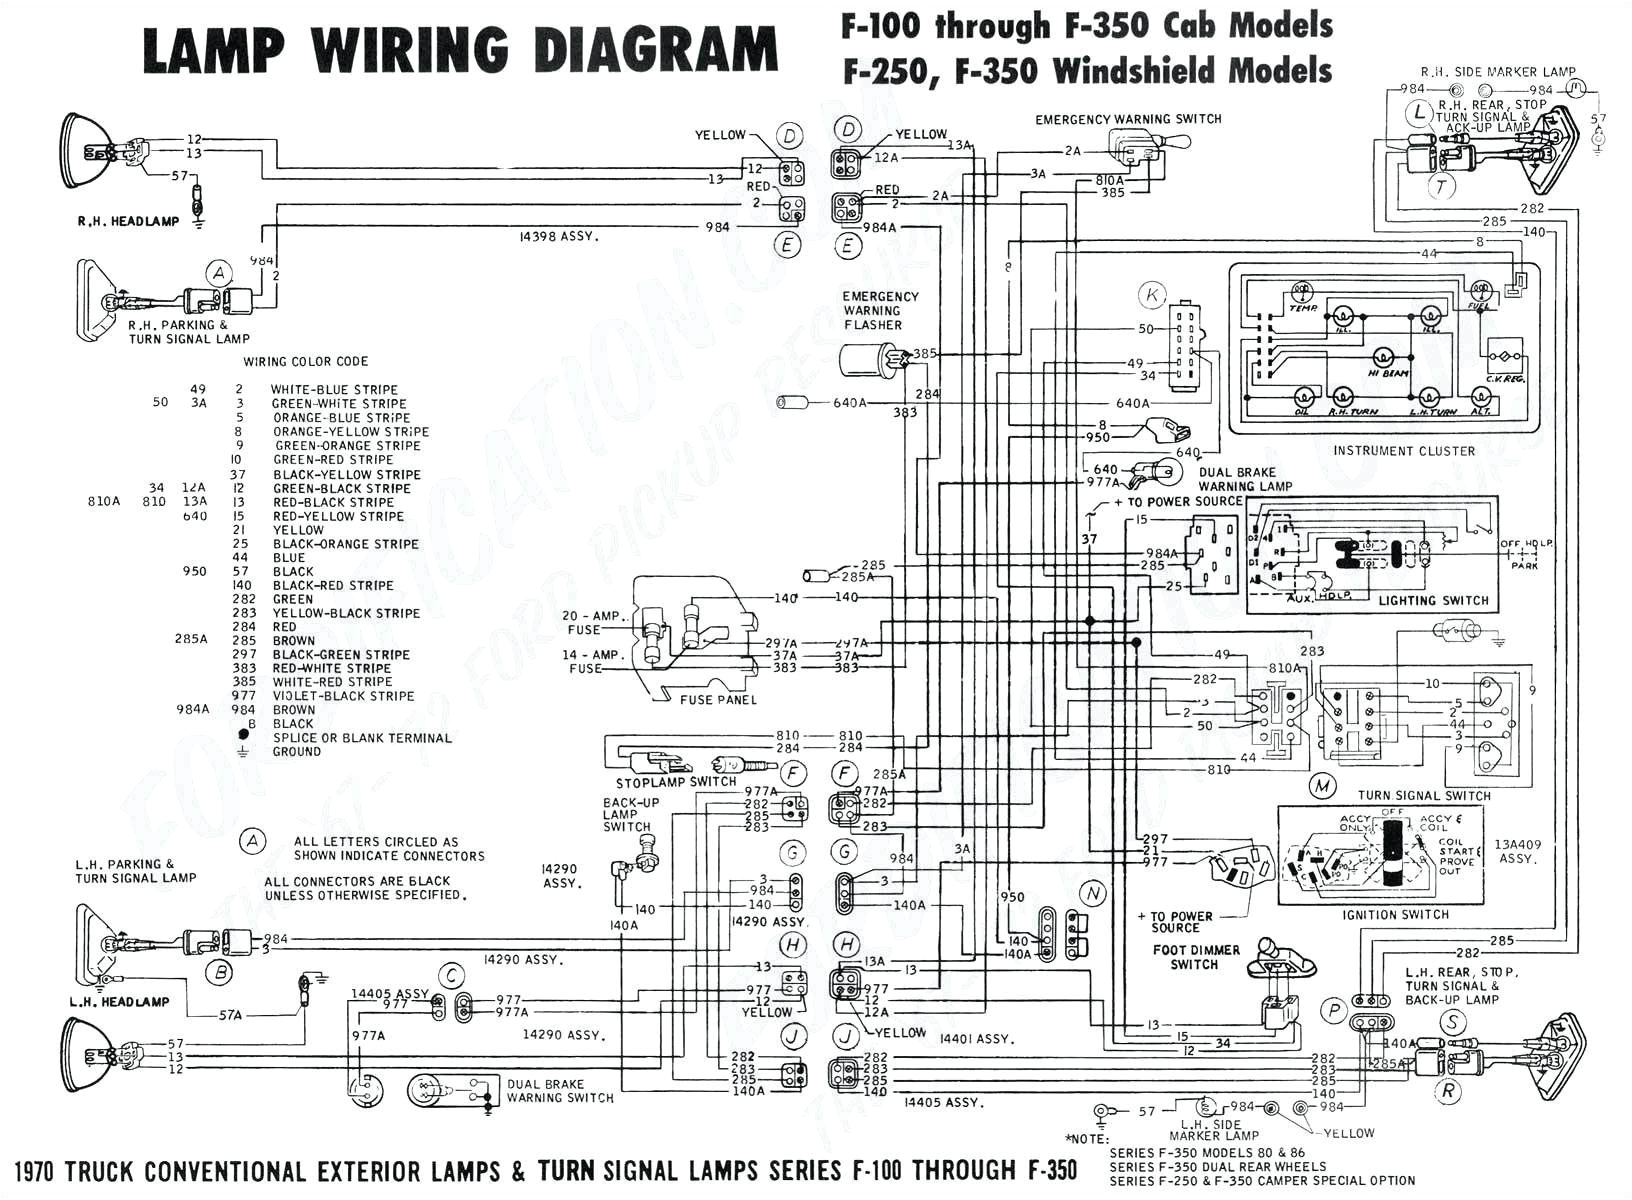 blank wiring diagram wiring diagram technic a wire blank diagram diagram database rega wire blank diagram